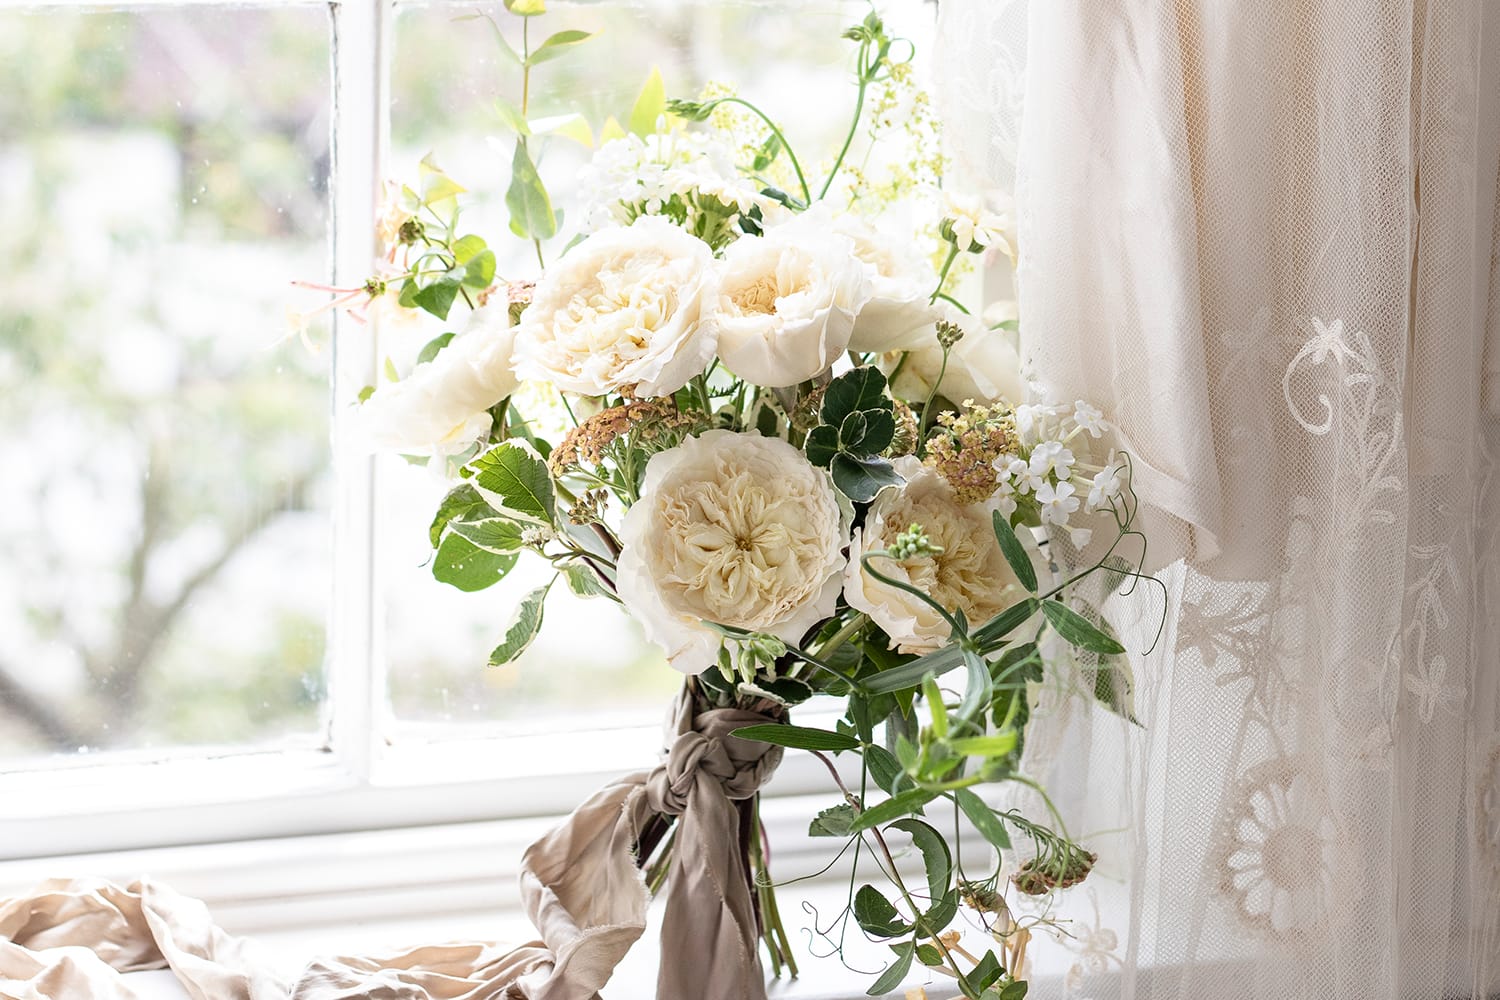 Patience cream roses wedding bouquet on windowsill